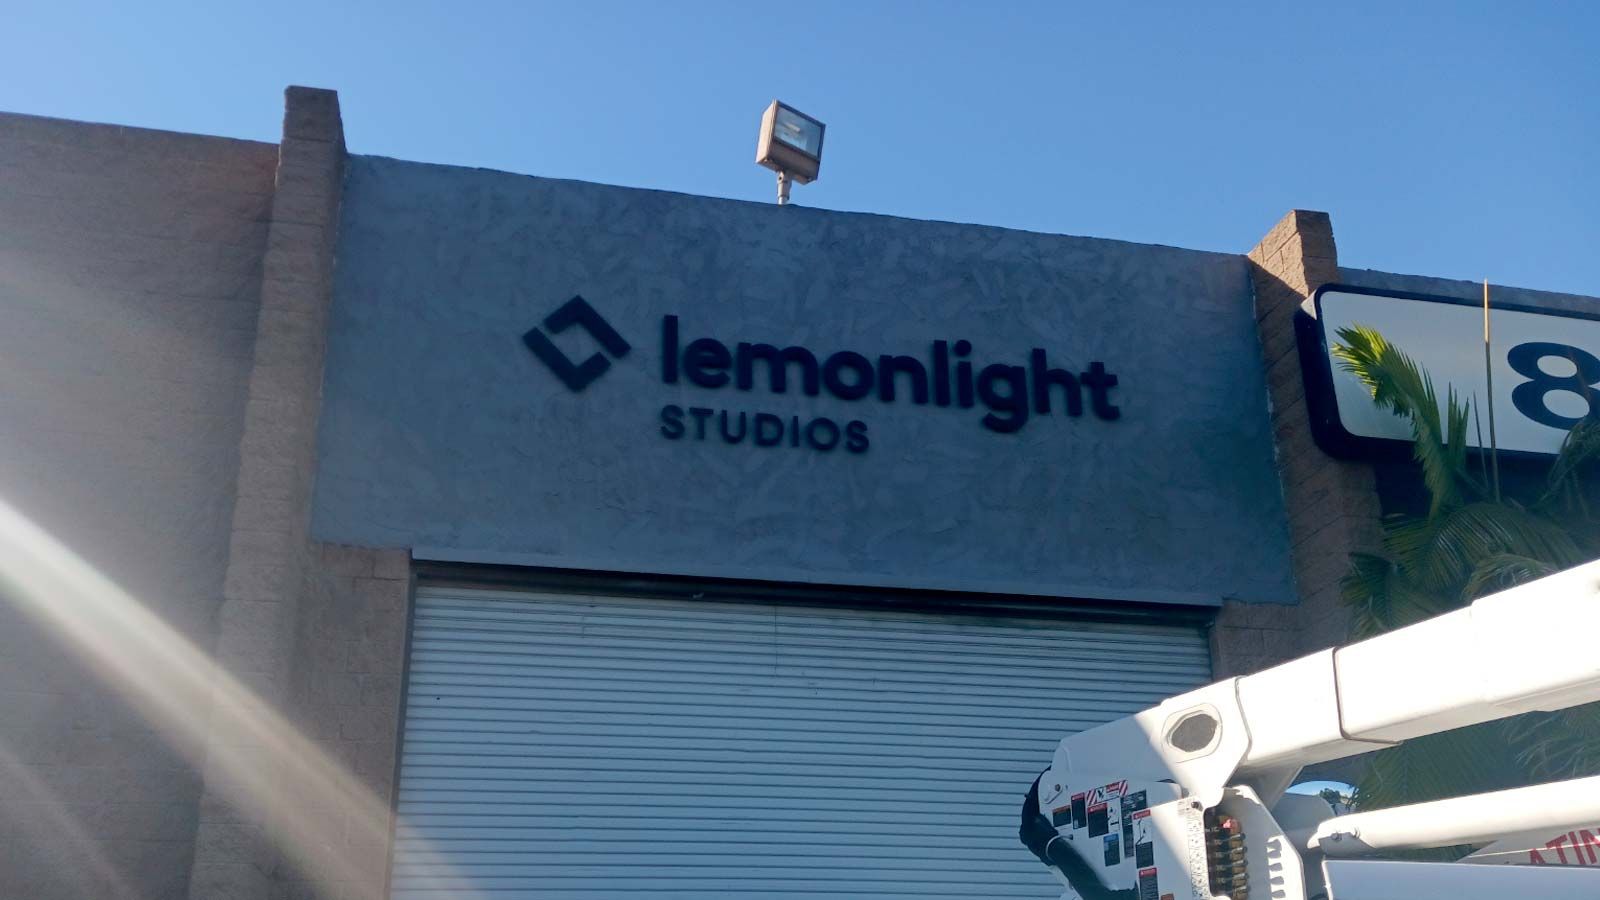 Lemonlight Studios building top sign